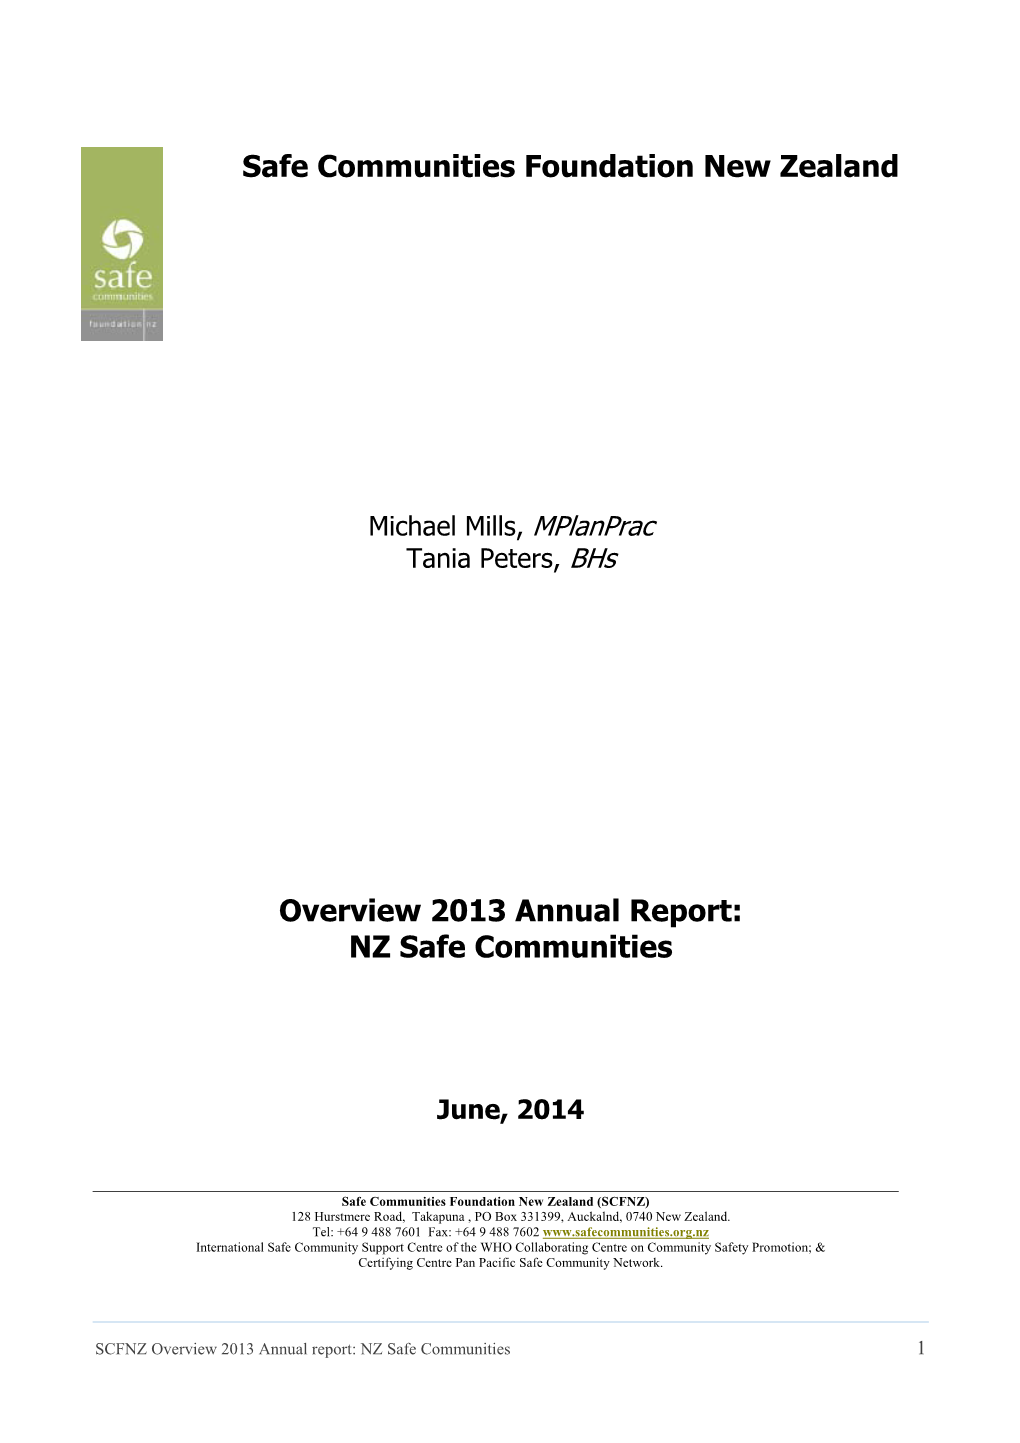 Overview 2013 Annual Report: NZ Safe Communities